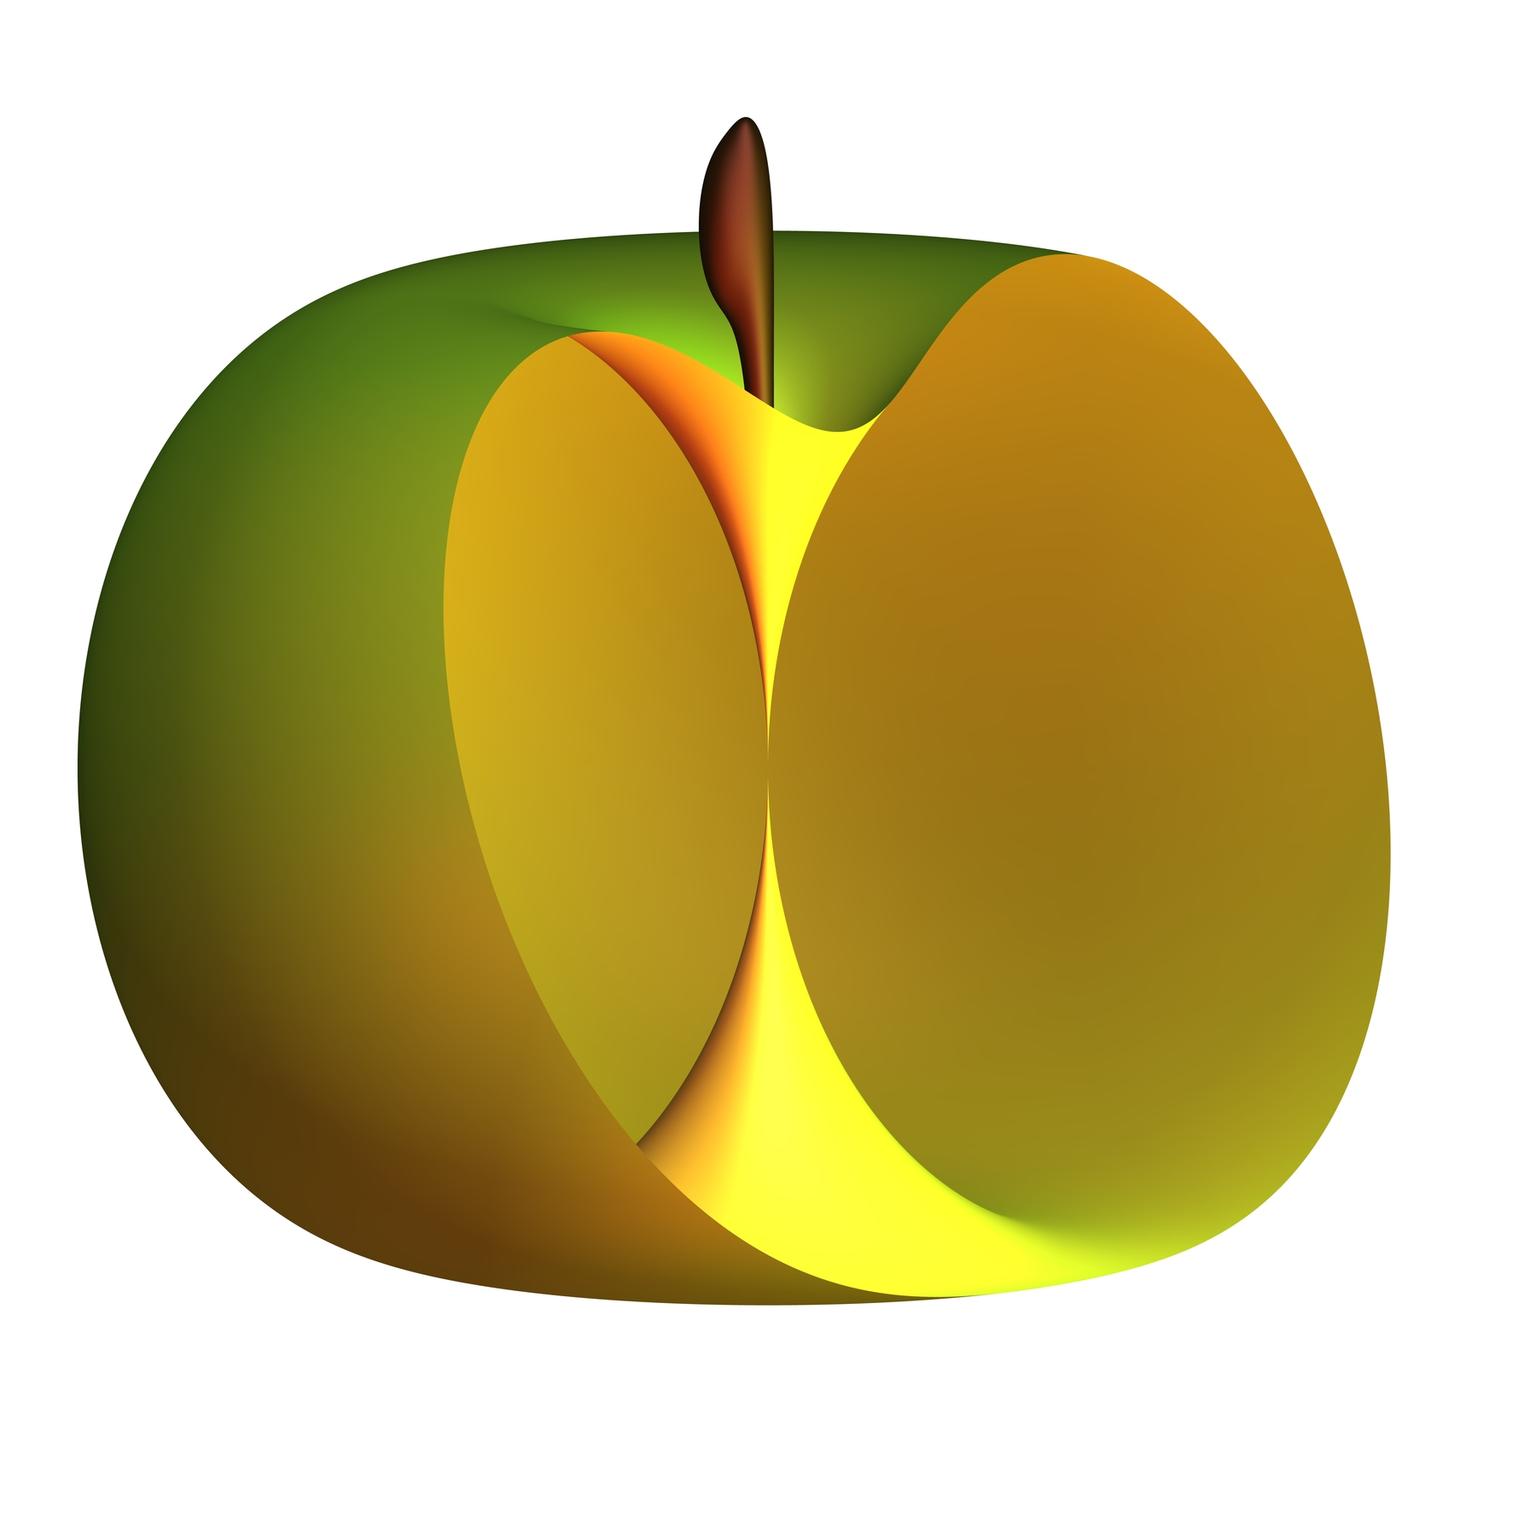 Image for entry 'Algebraic Apple'